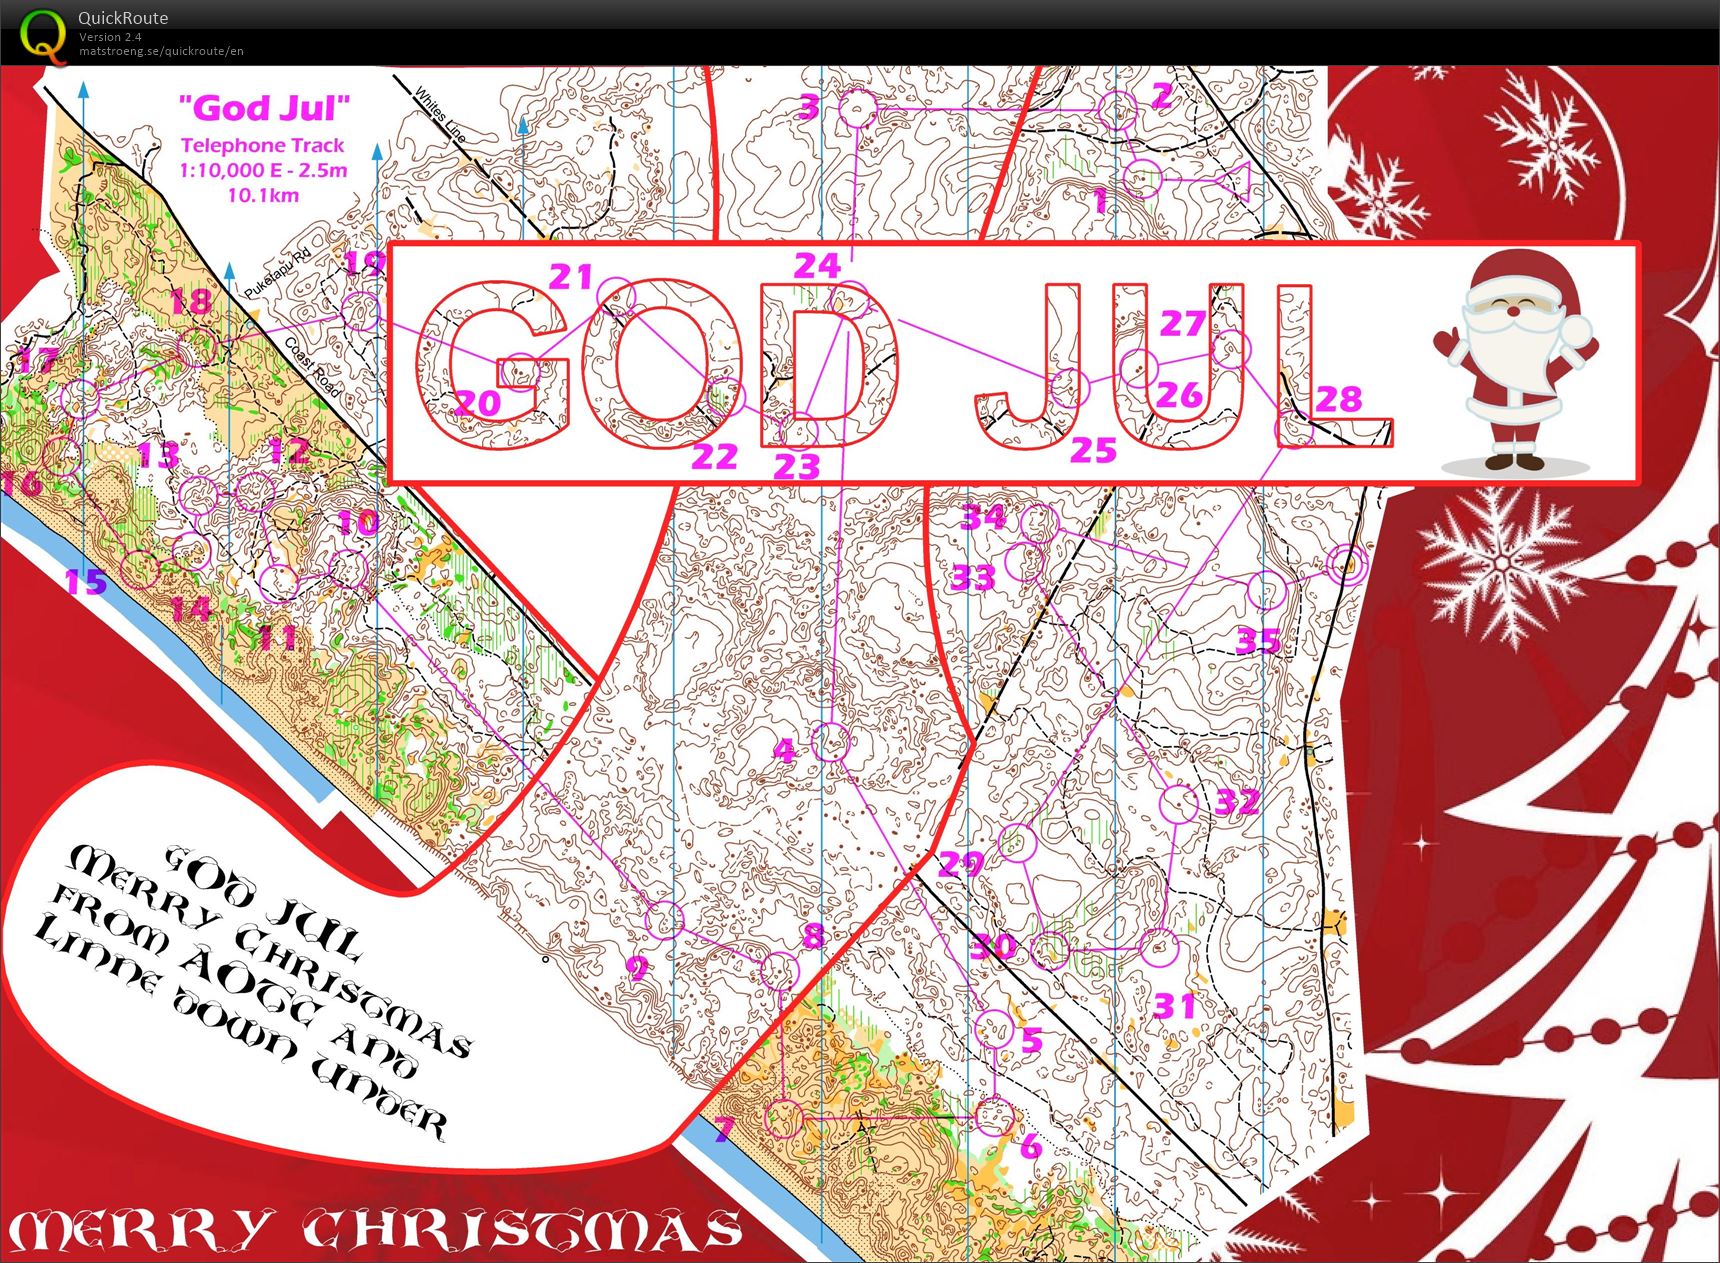 God Jul - Christmas Eve Training (24/12/2014)